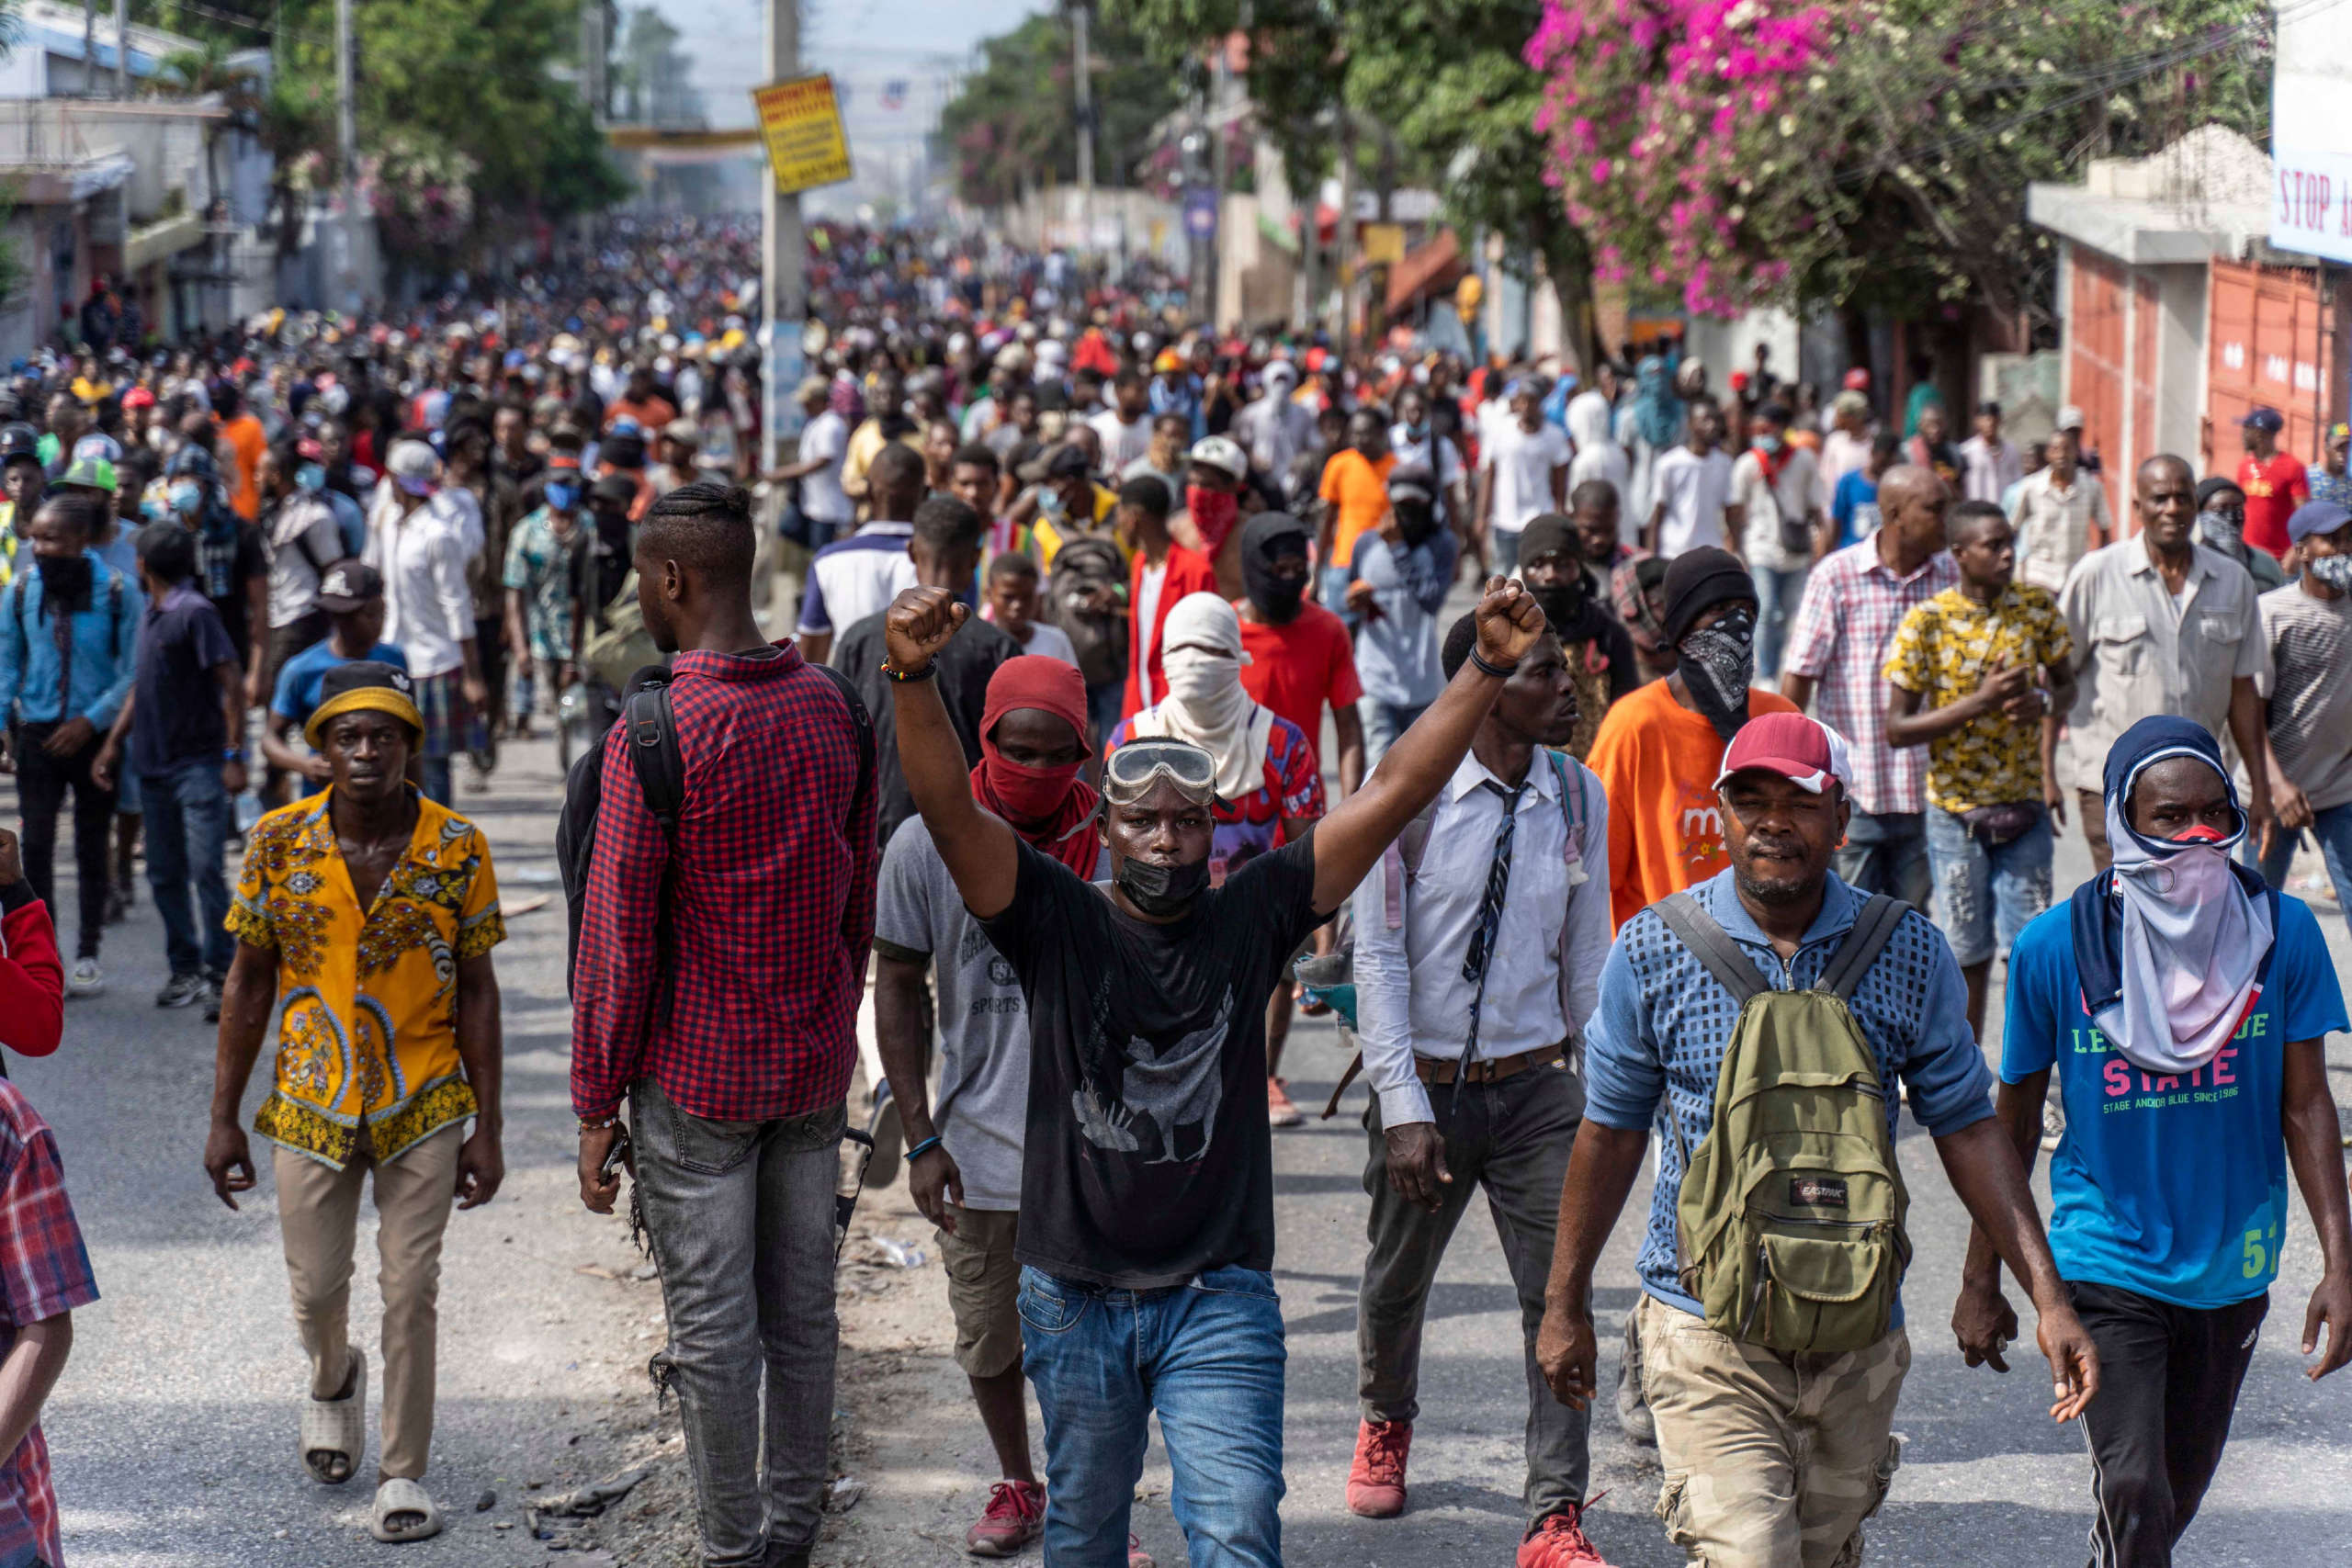 Paralysis: The International Community's Response to the Crisis in Haiti